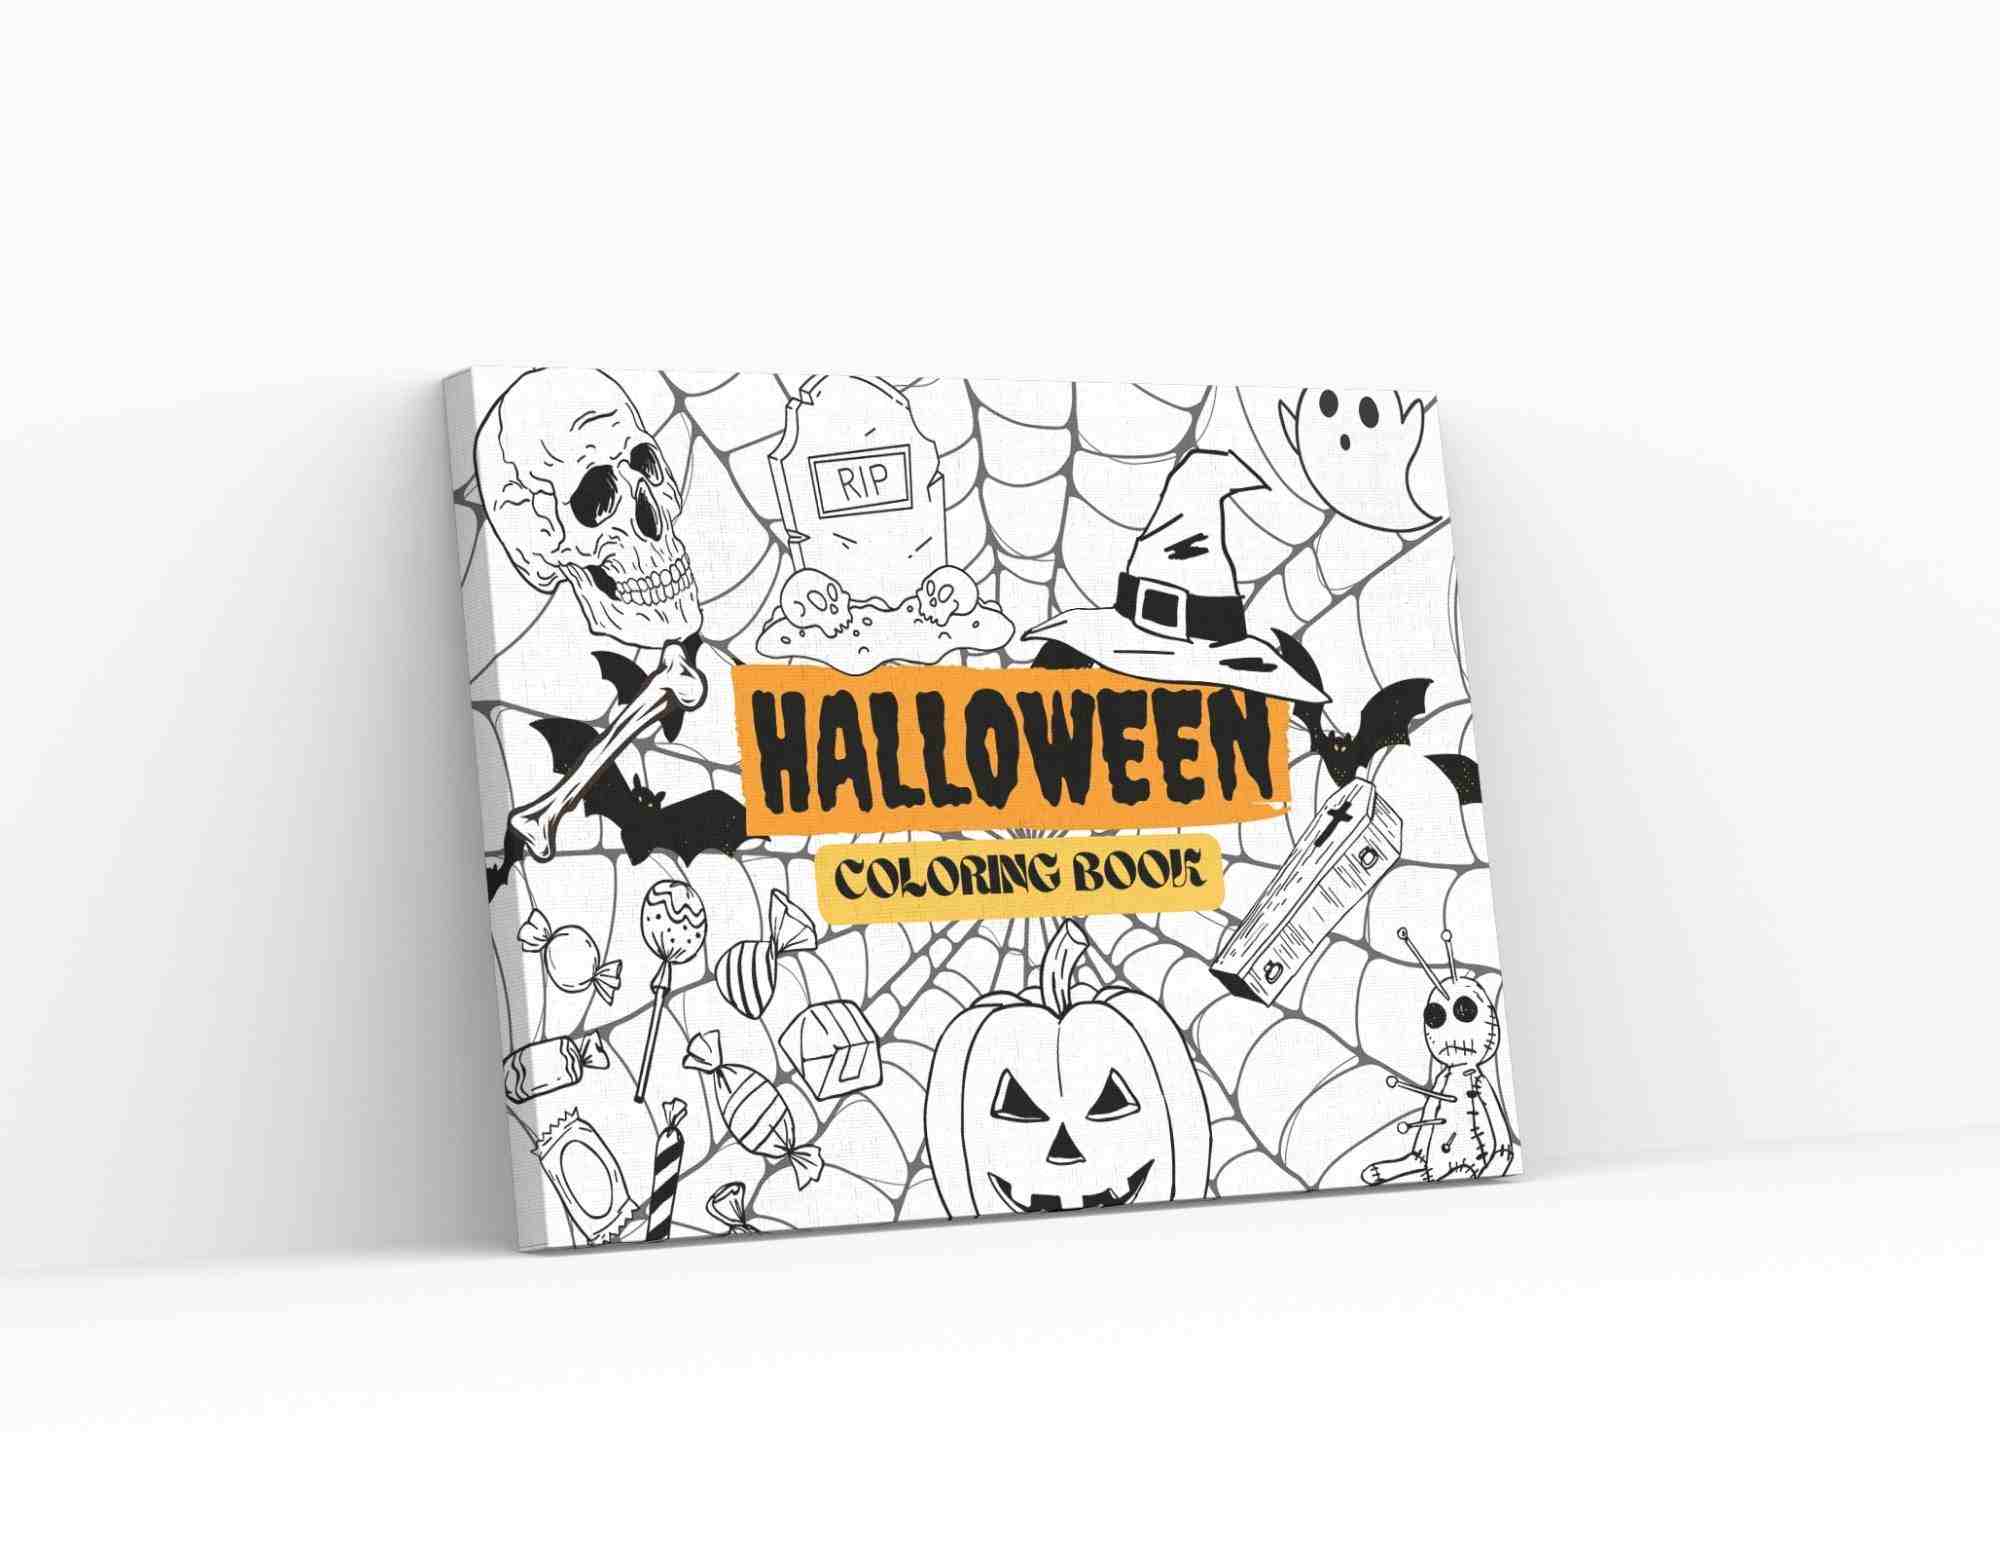 Halloween Coloring Book Printable